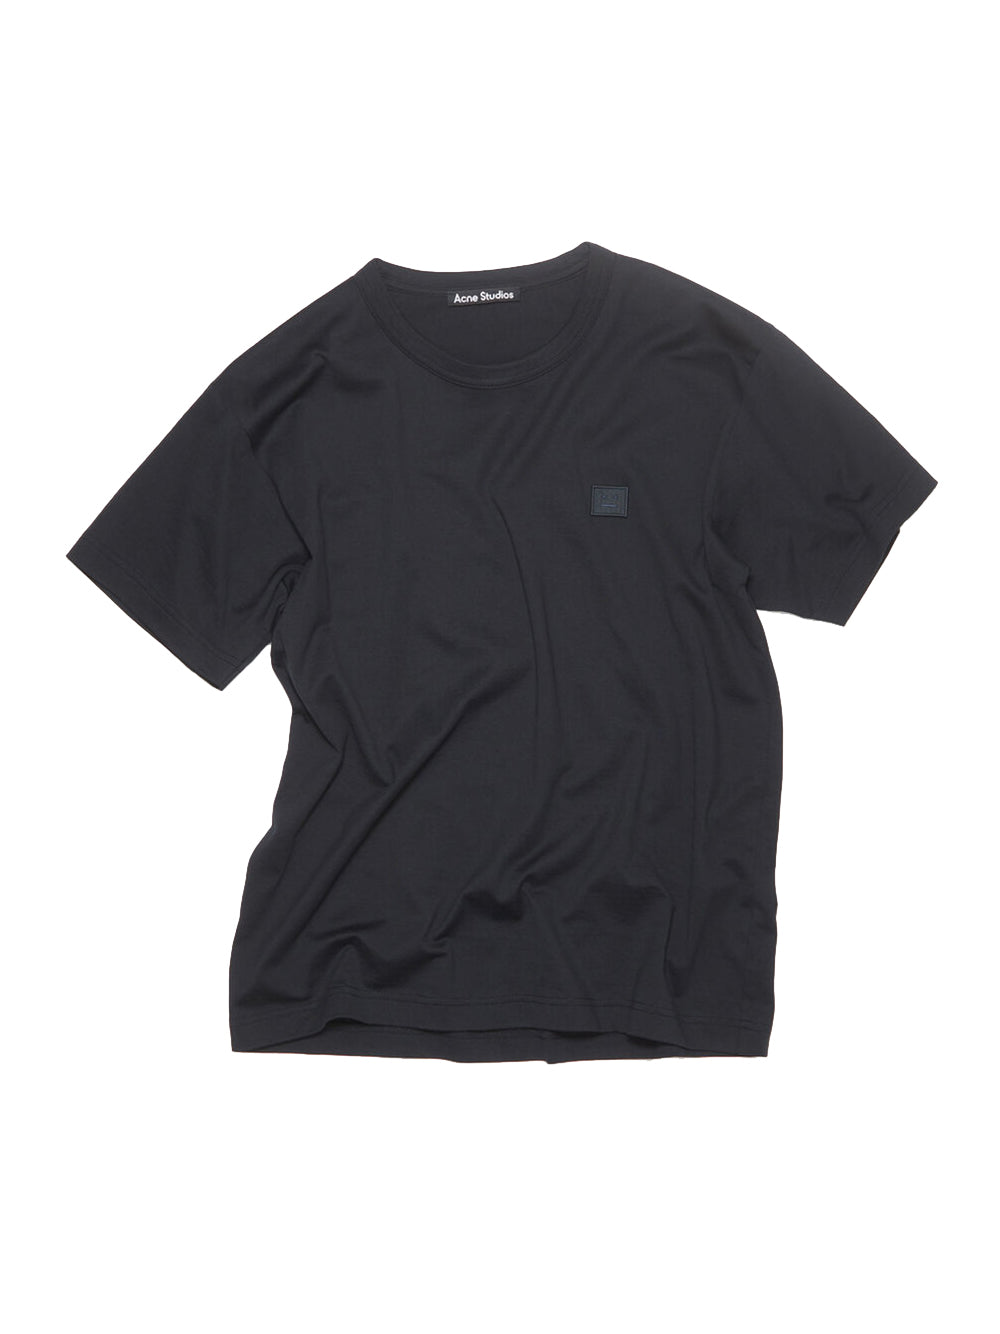 Regular Fit Crew Neck T-Shirts (Black)